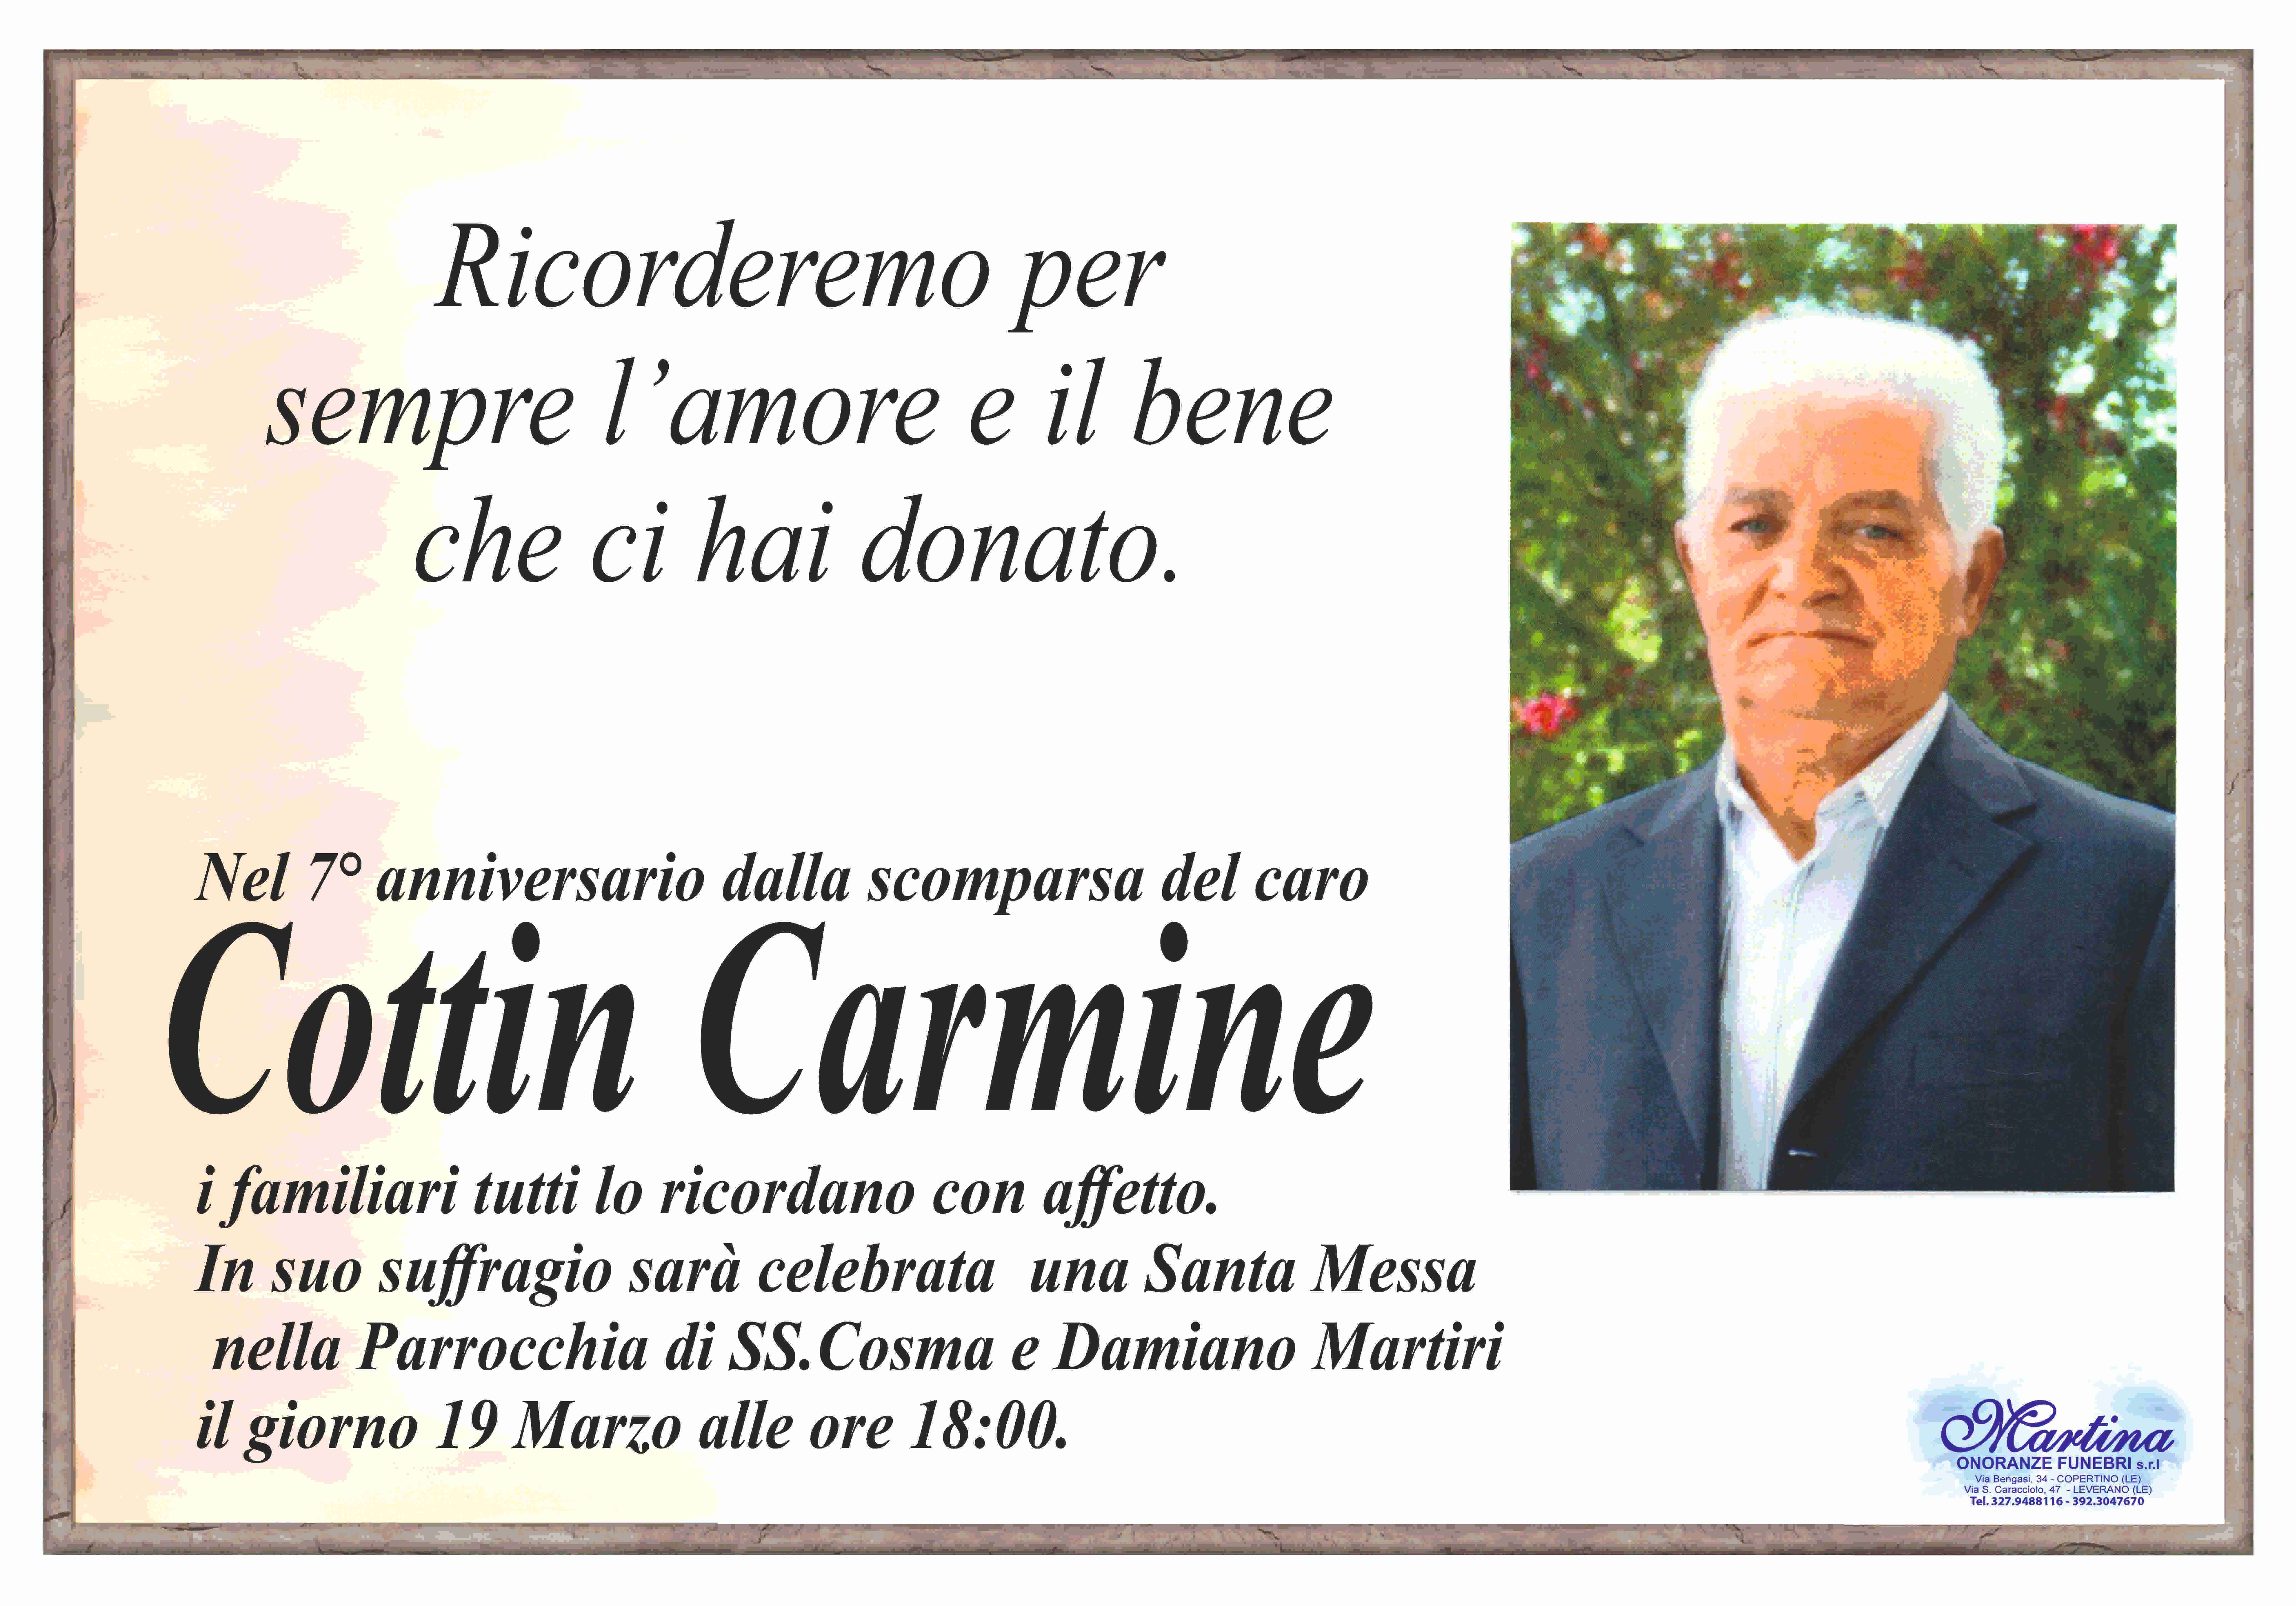 Carmine Cottin